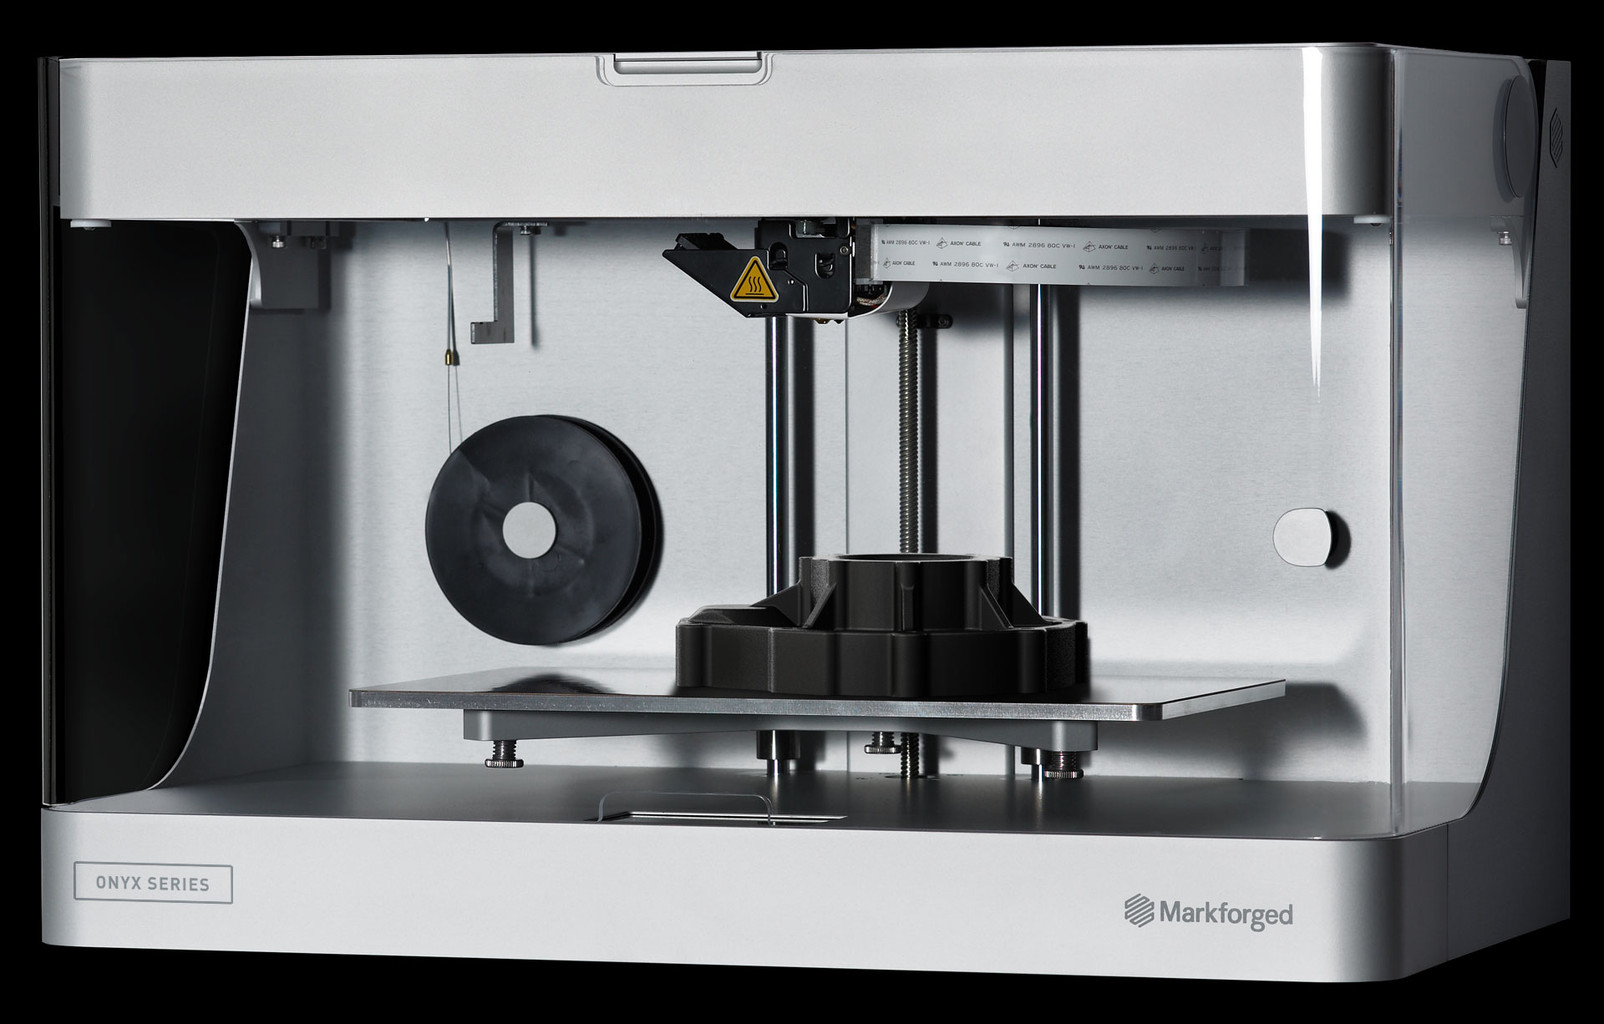 Releases Onyx One Carbon Fibre Printer for $ 3,500